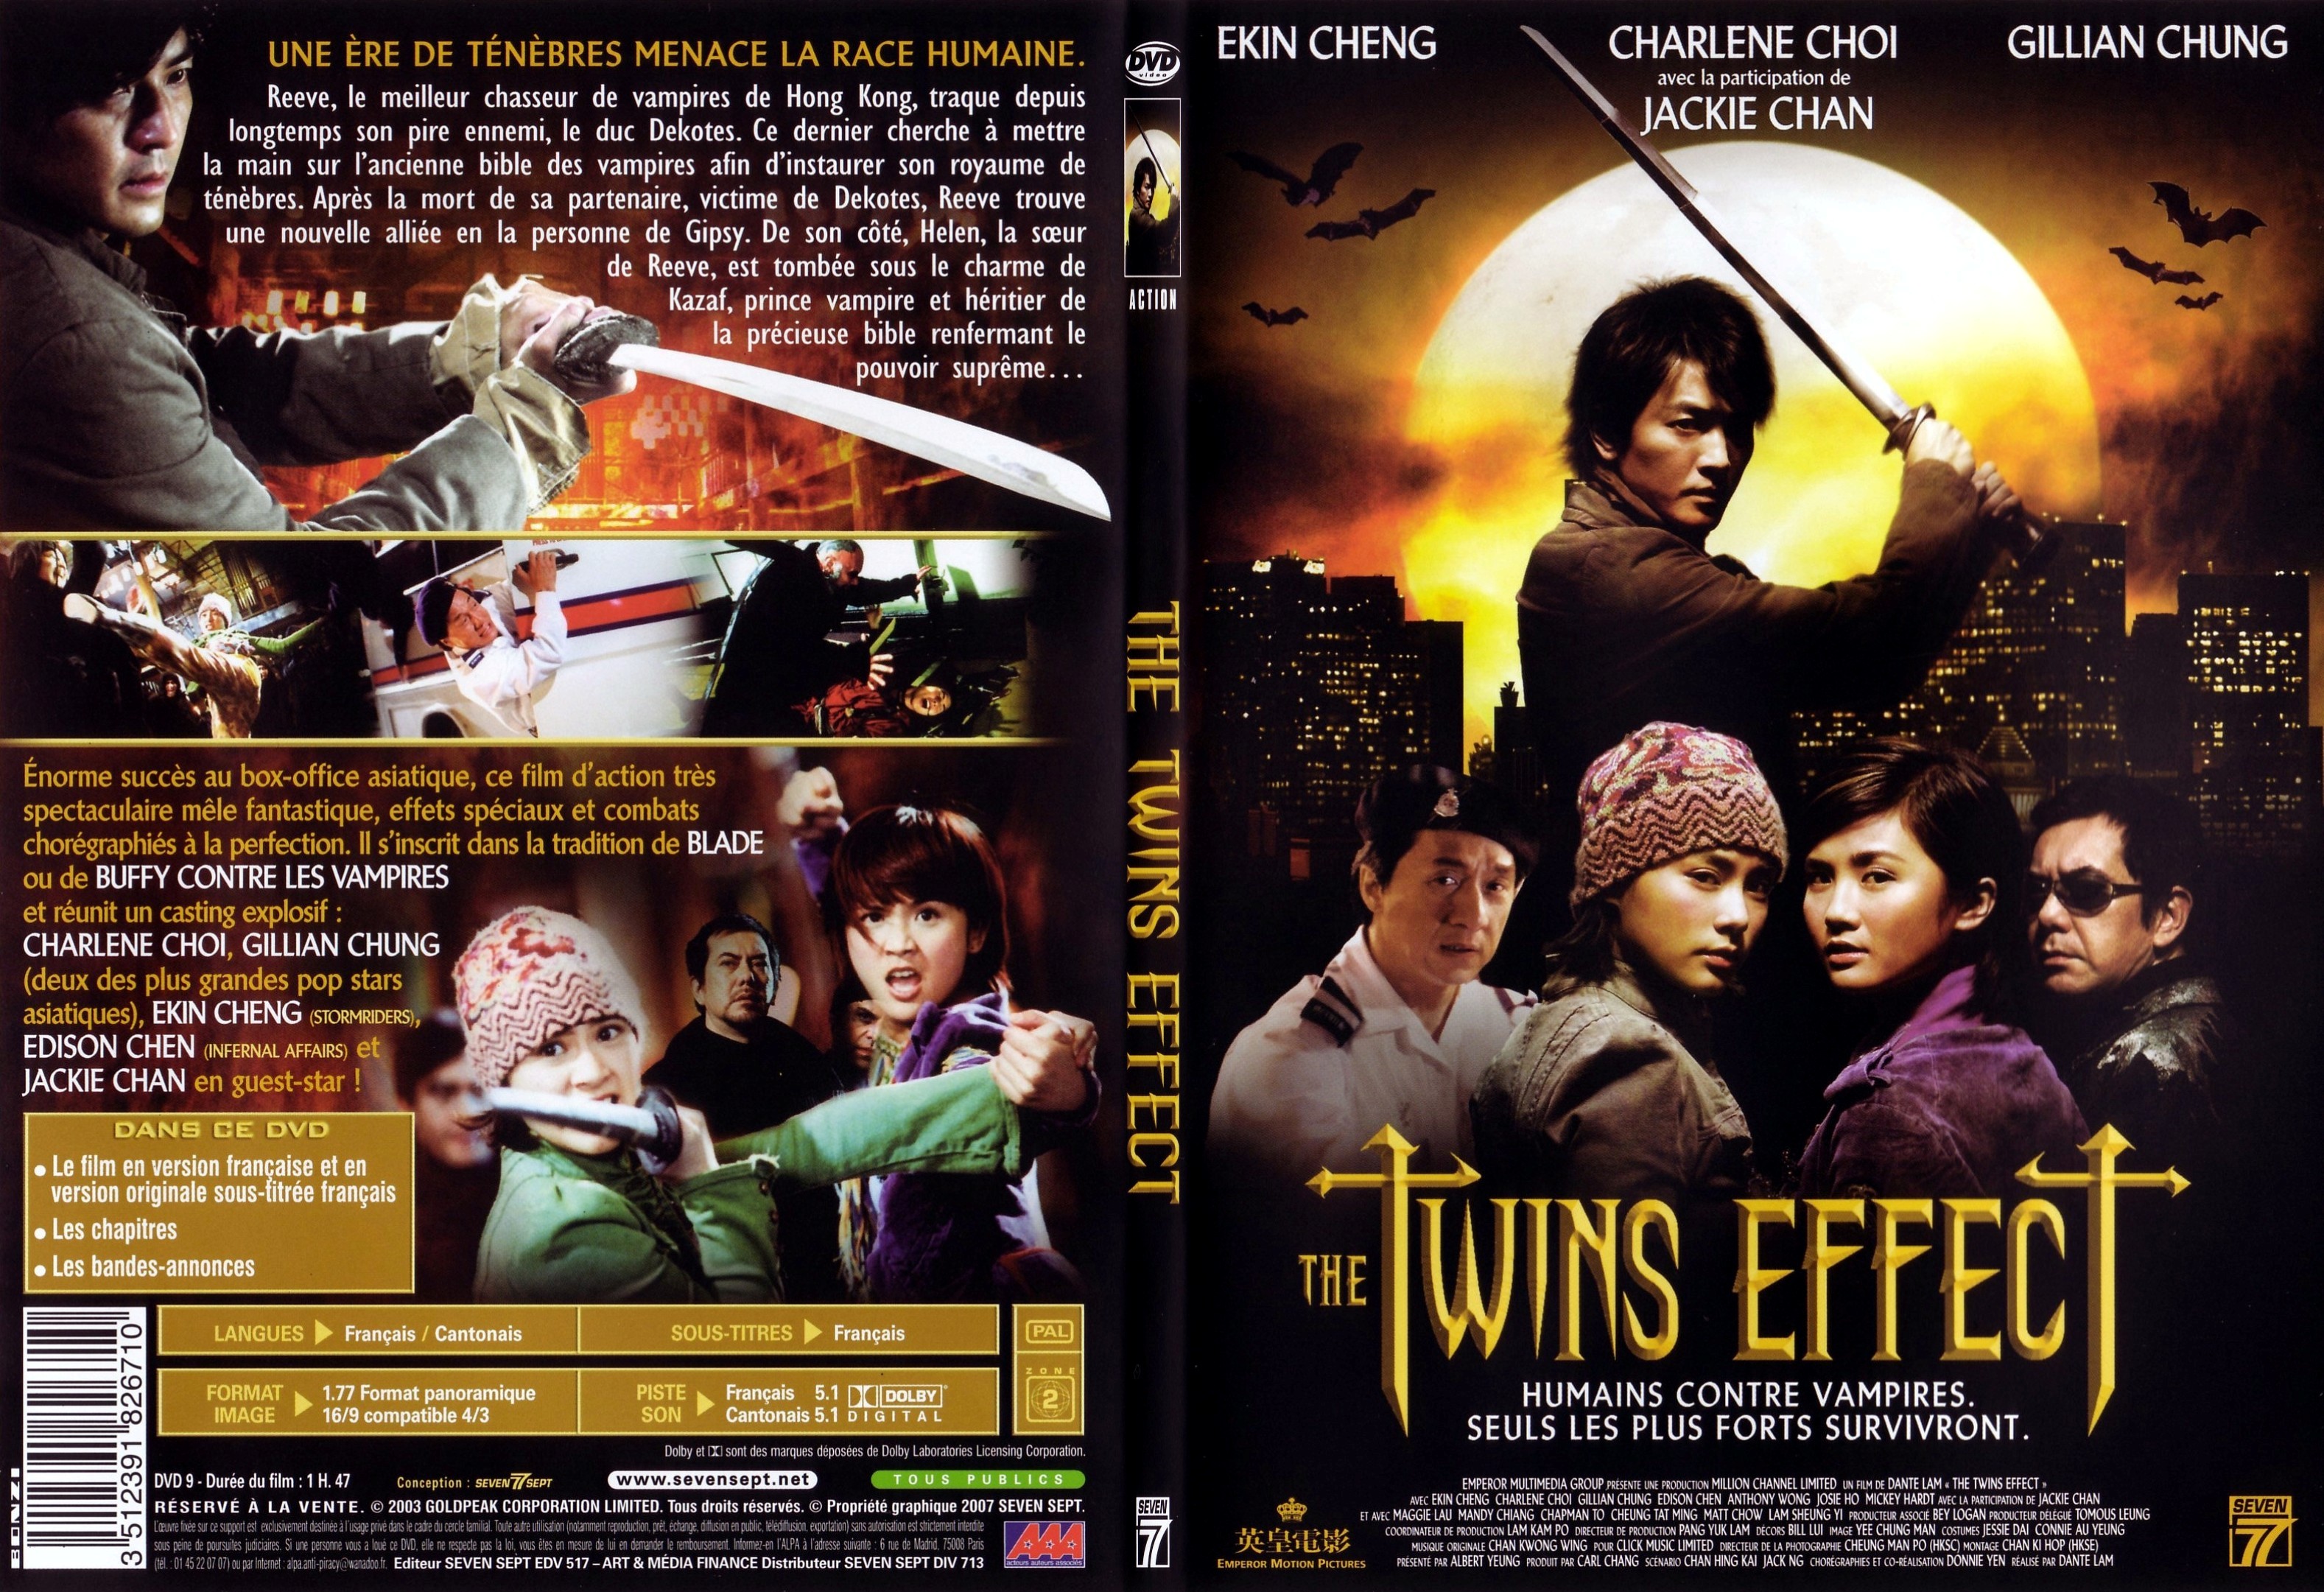 Jaquette DVD Twins effect - SLIM